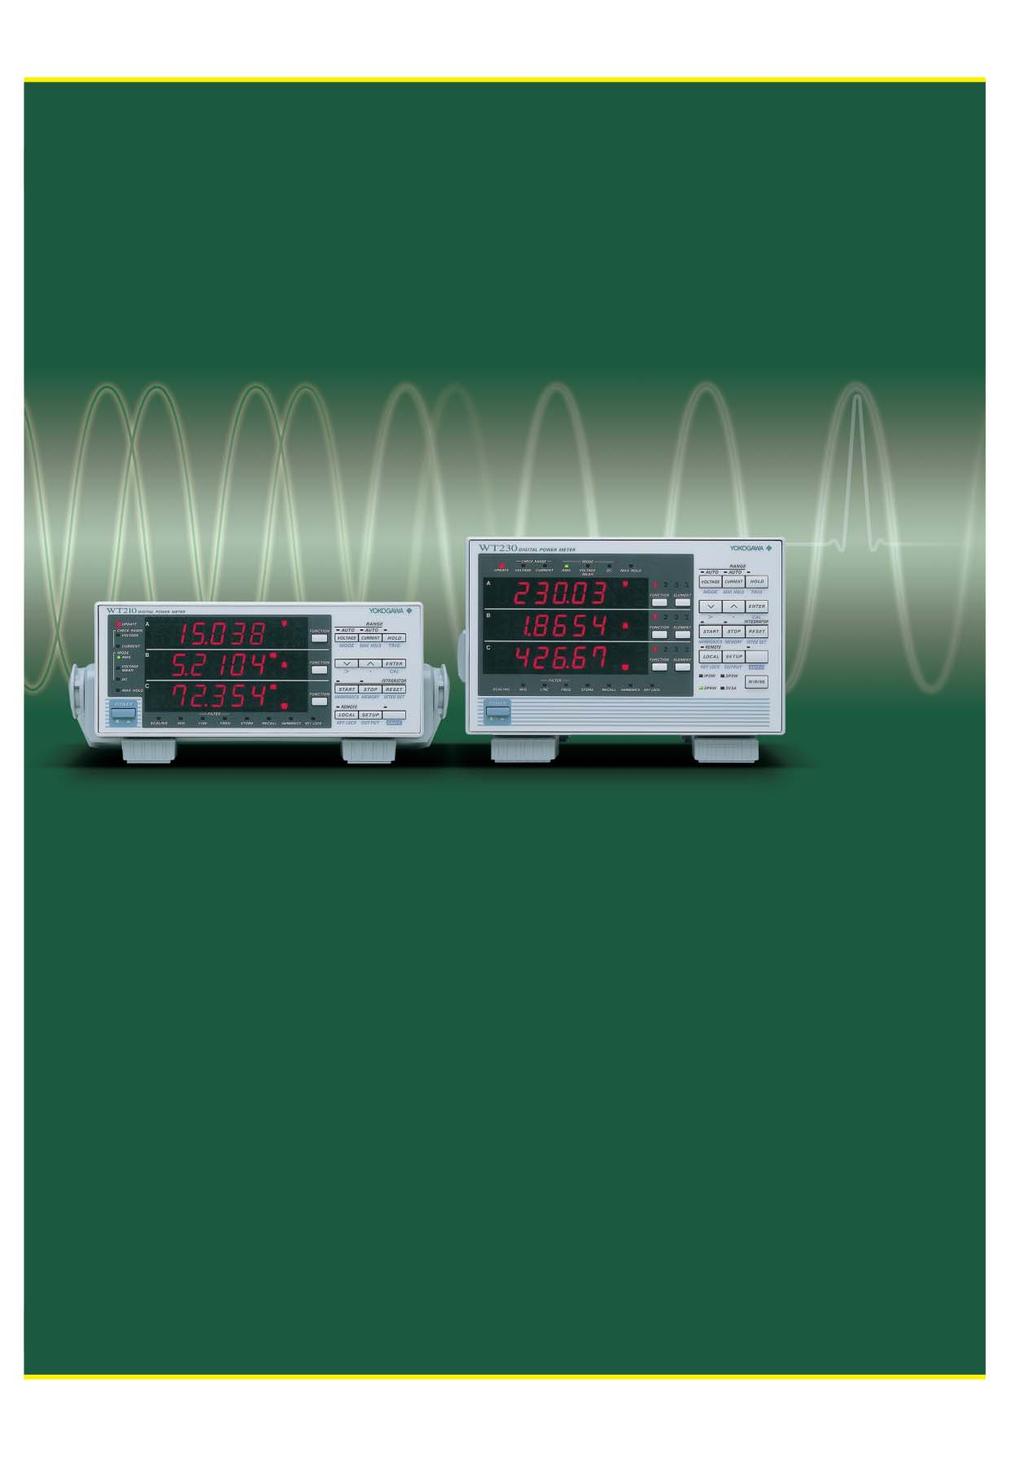 WT2/WT23 Digital Power Meters WT2/WT23 Digital Power Meters Digital Sampling Power Meters with Superior Cost Performance Low power measurement (IEC623) Harmonic measurement Compact design (half-rack